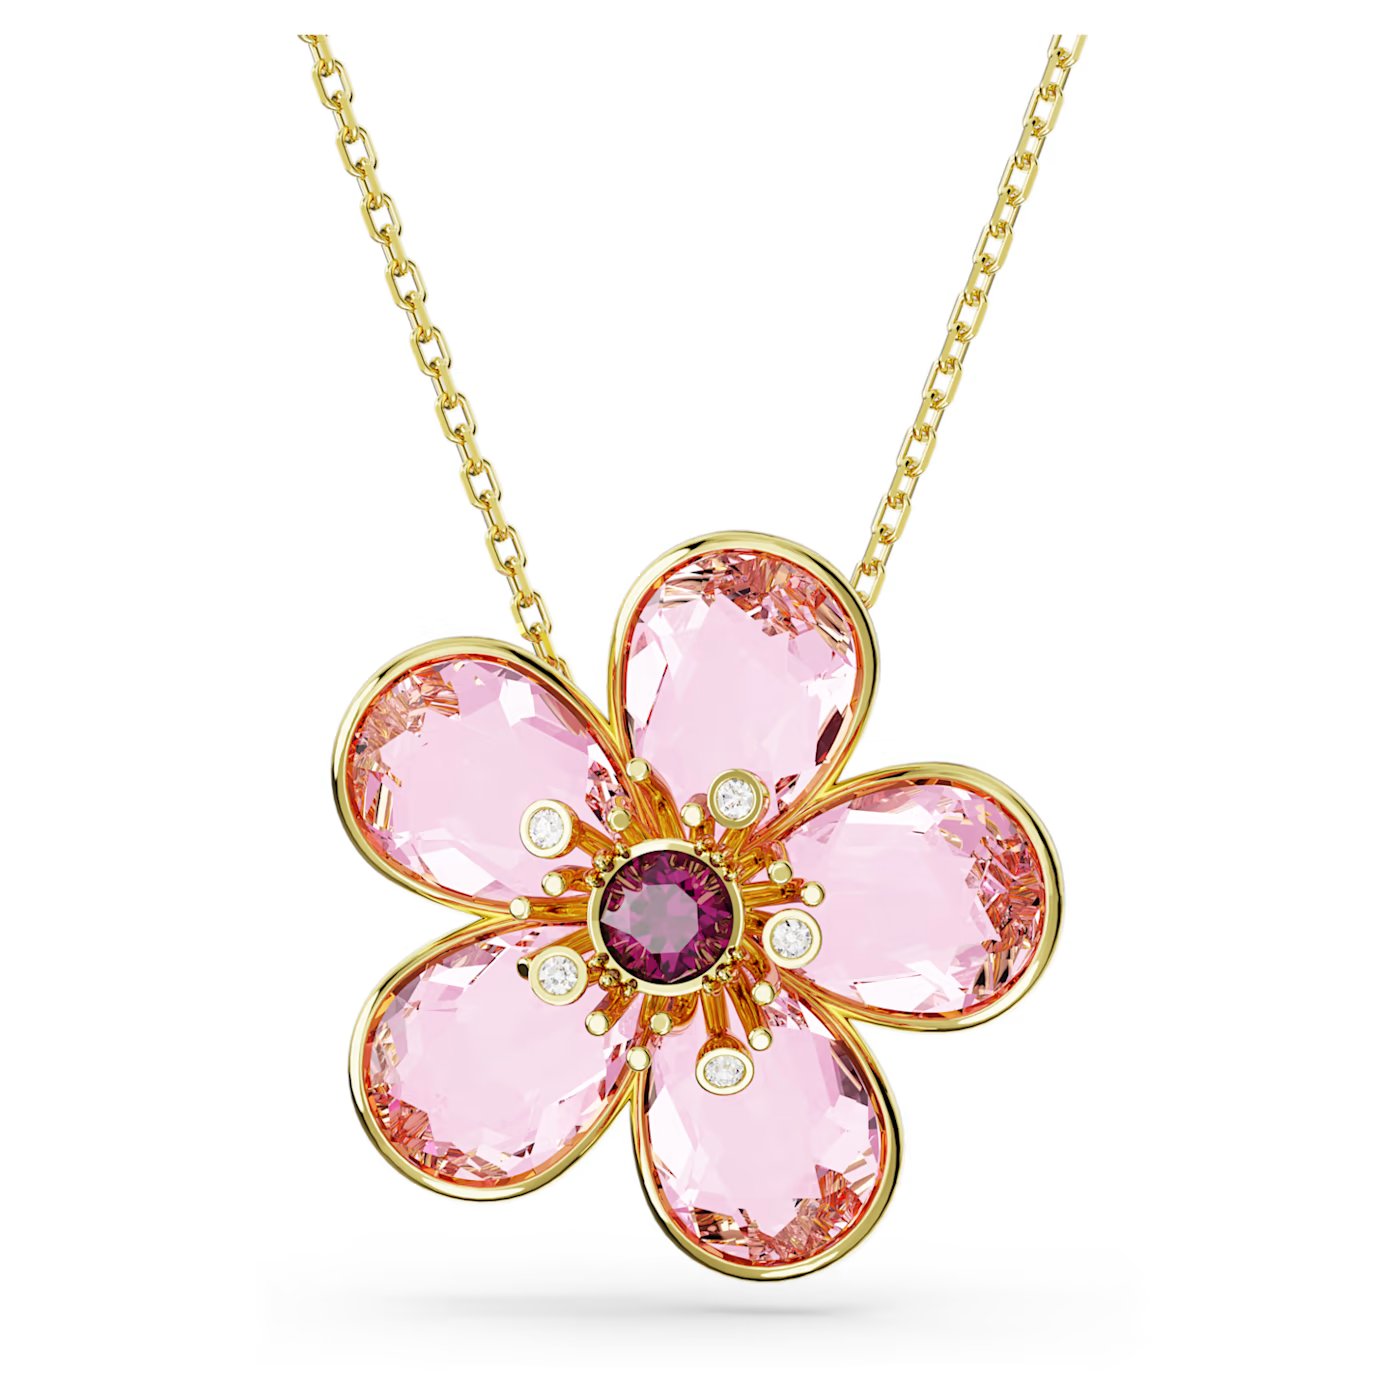 642453c6f1bcf_florere-pendant--flower--small--pink--gold-tone-plated-swarovski-5657875.jpg